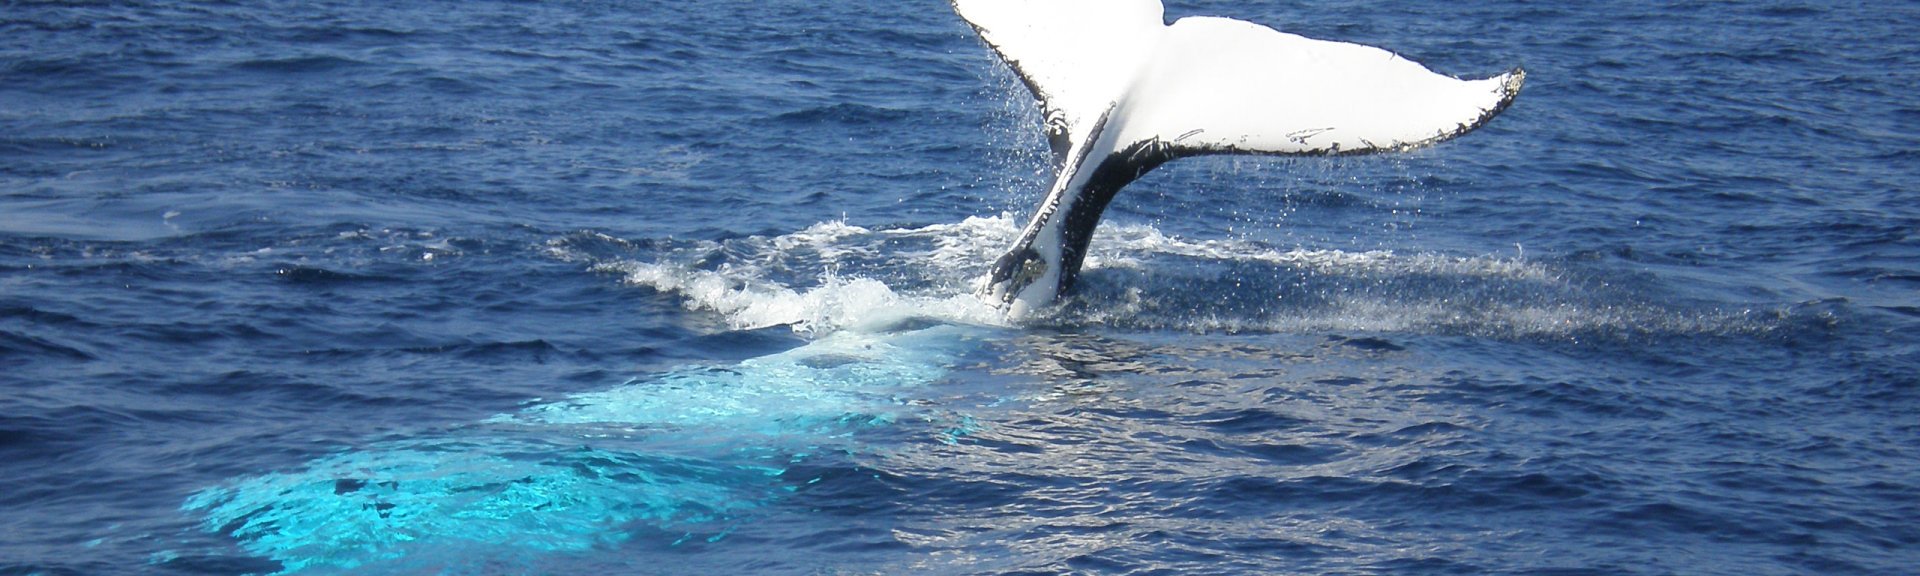 Enjoy seasonal whale watching. Picture: Matt Cross